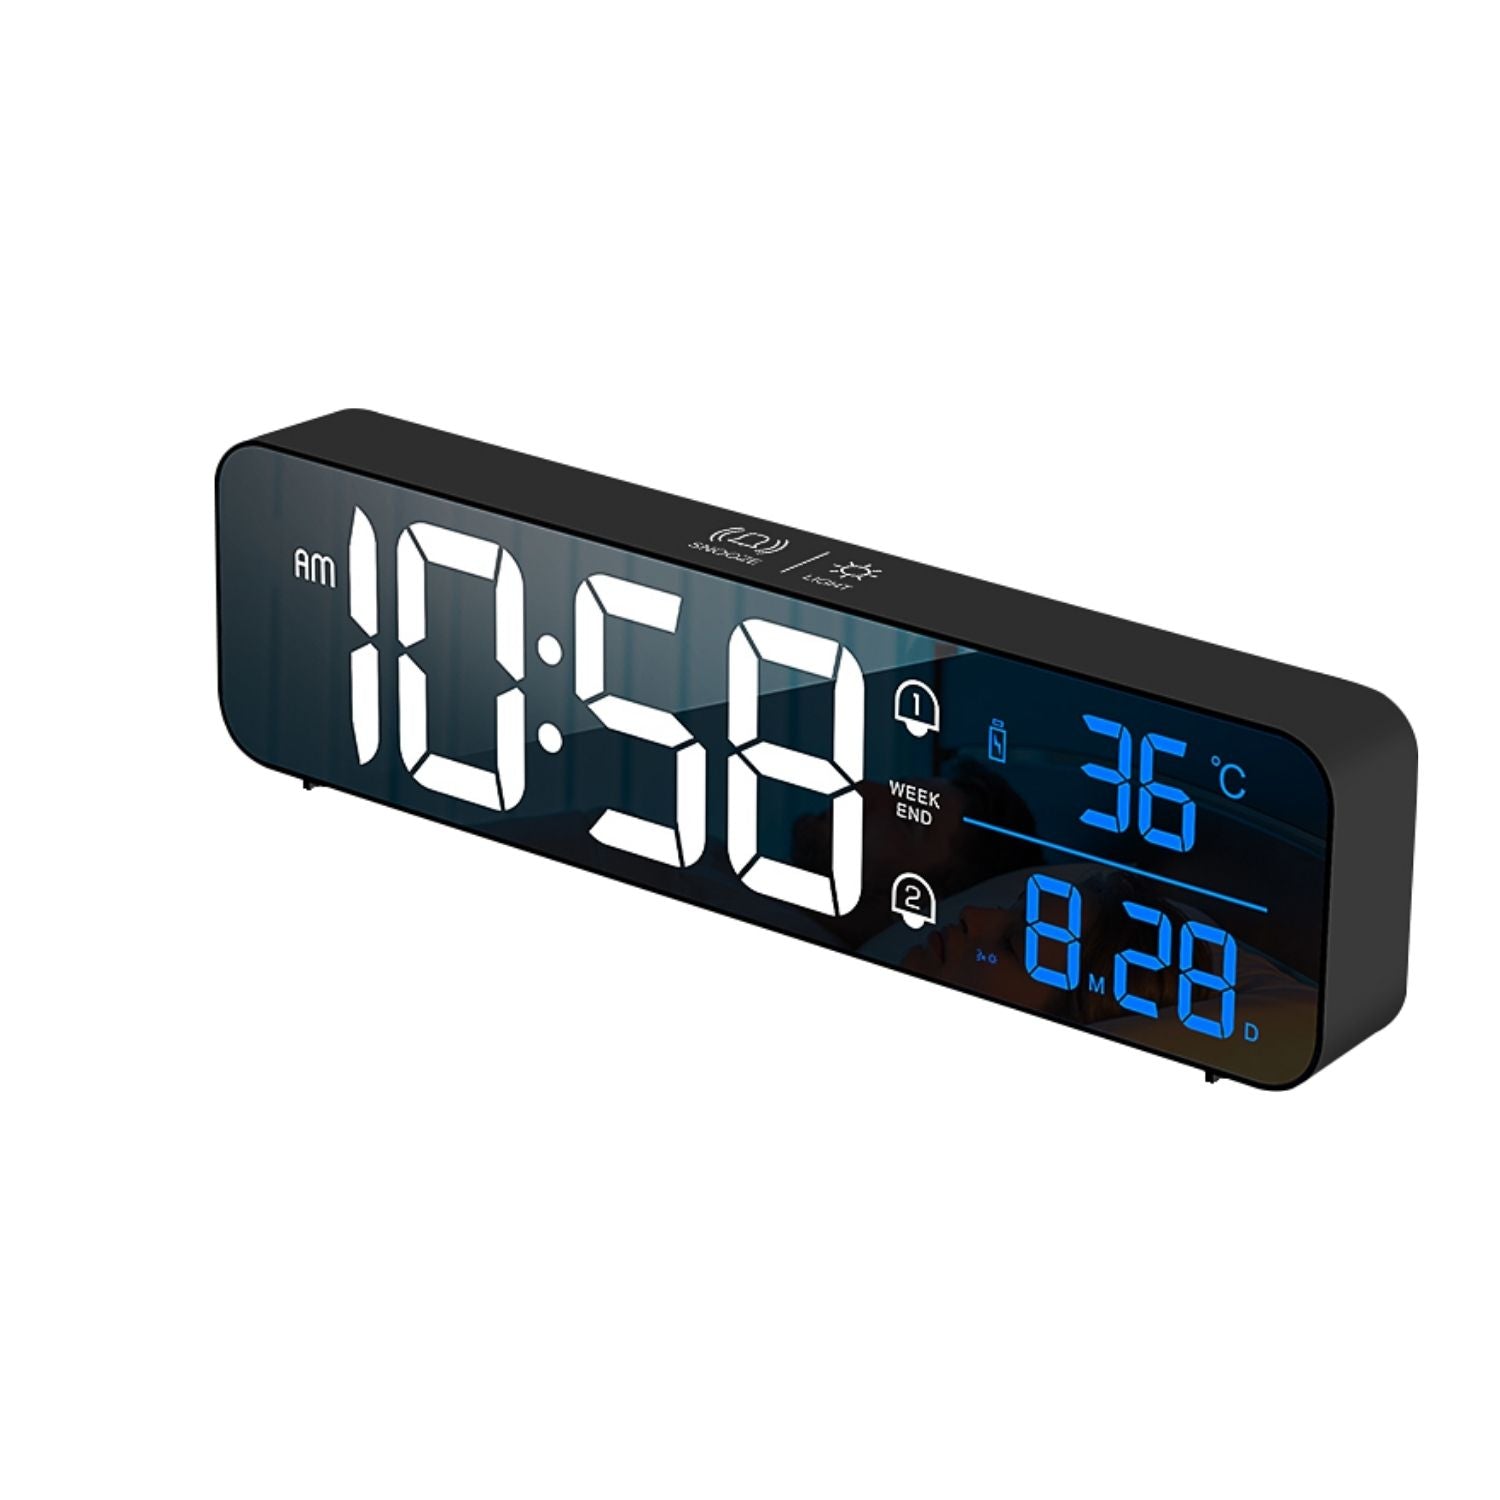 GOMINIMO Digital Clock Mirrored Black -